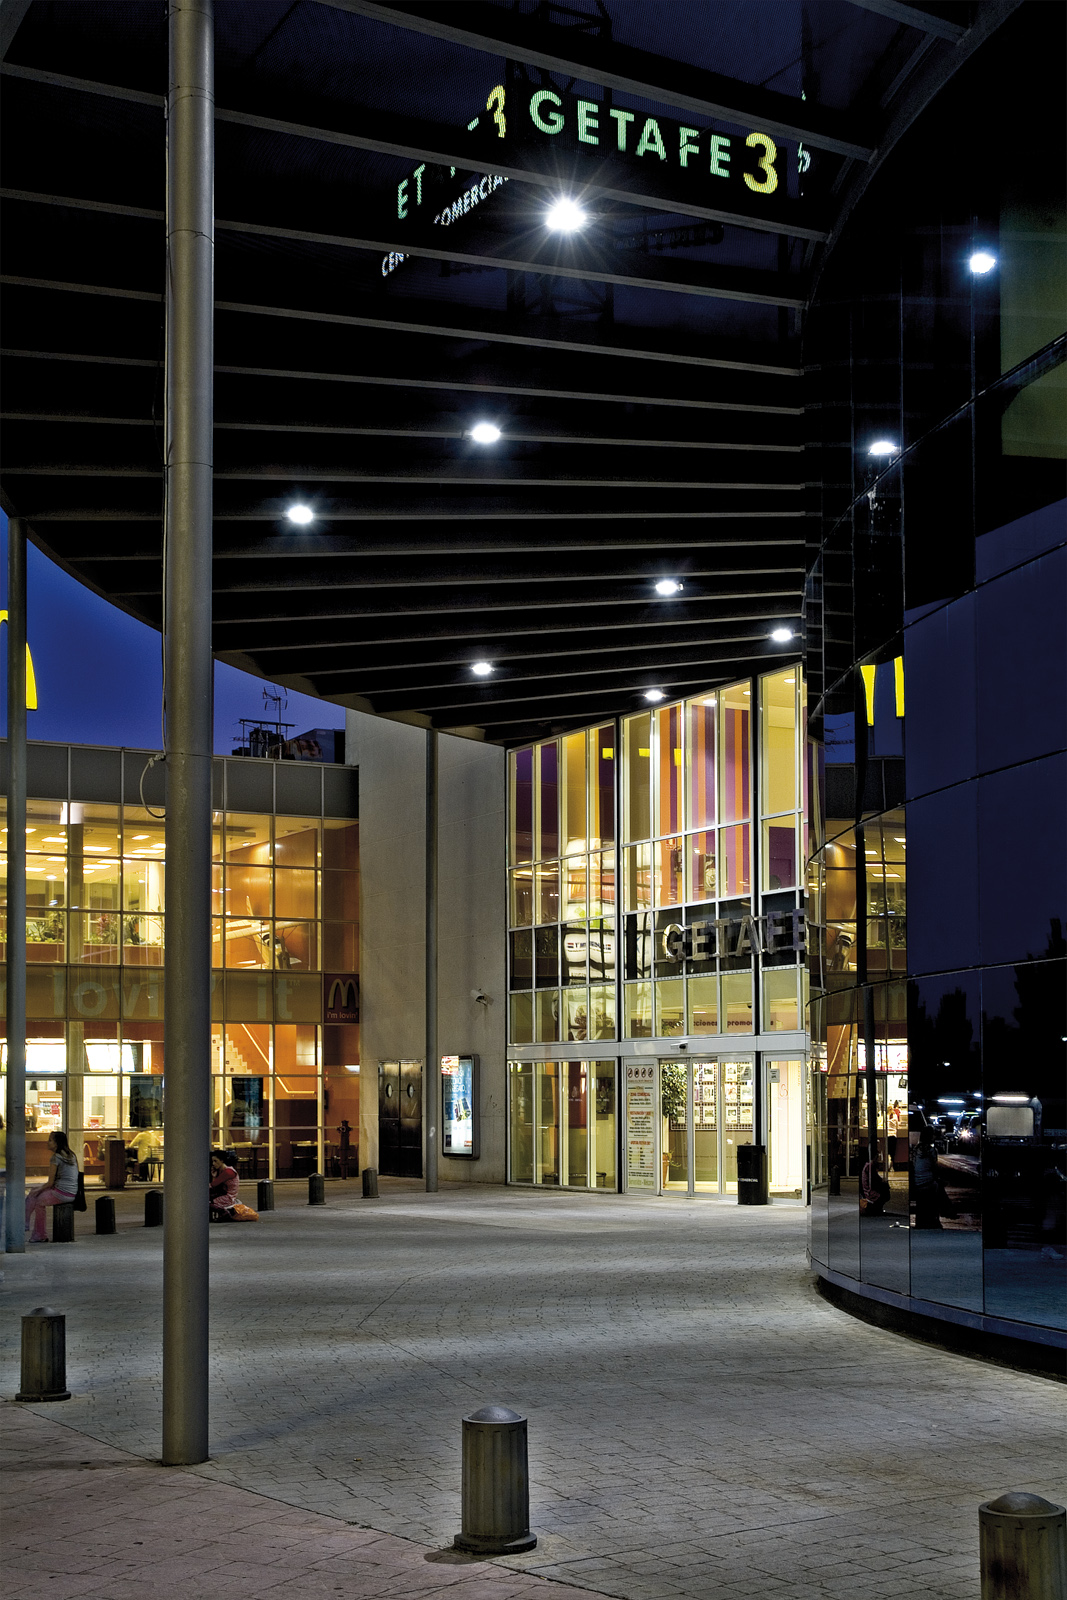 Centro comercial Getafe 3, imagen de fuera